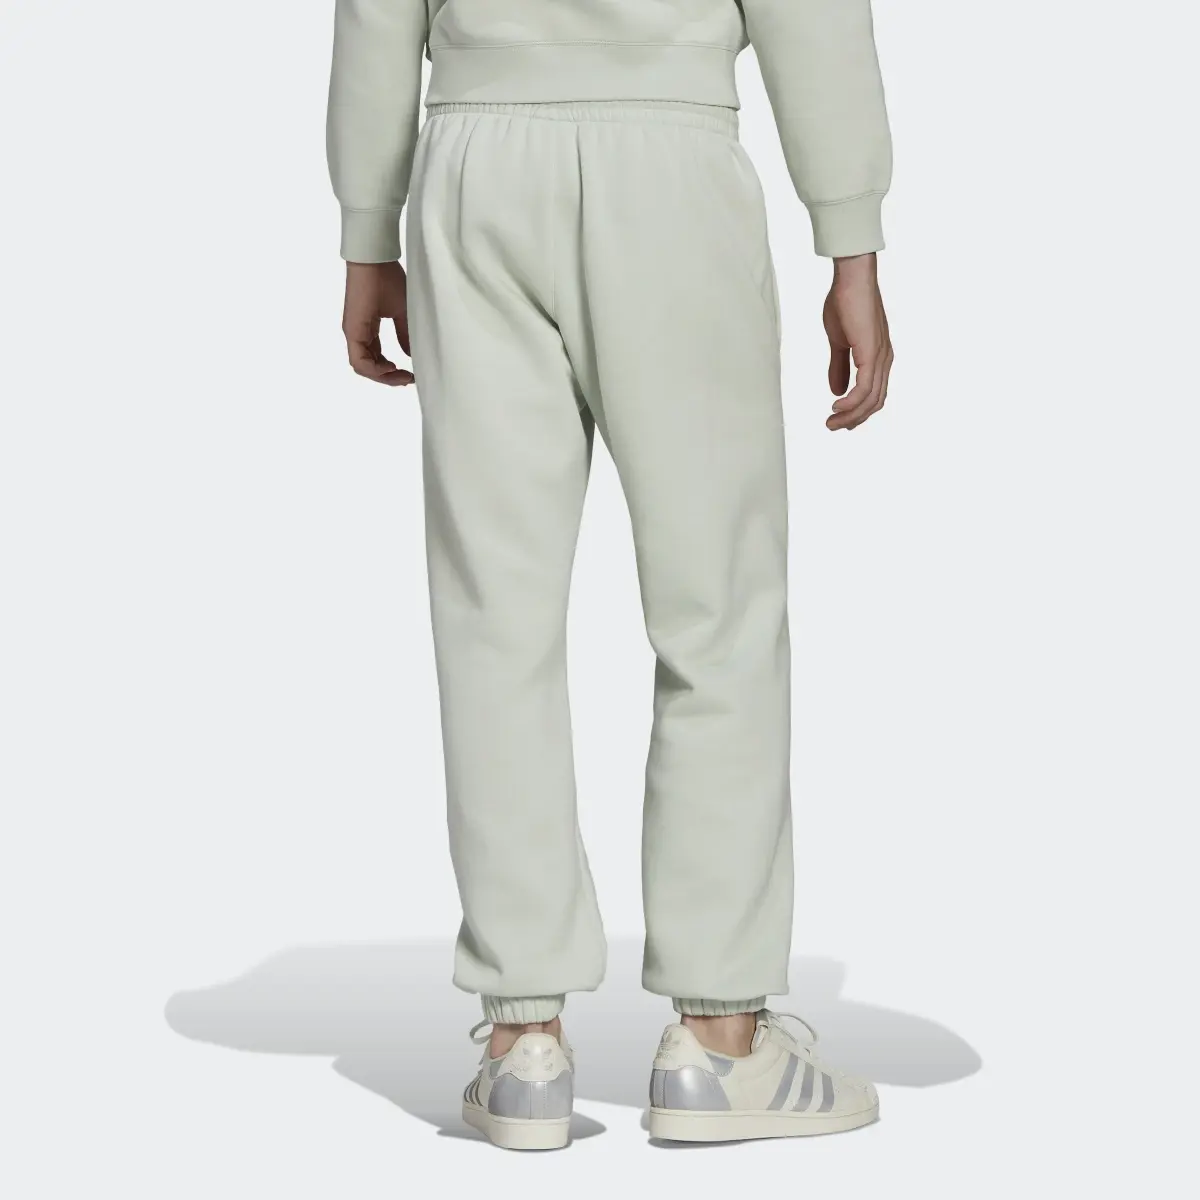 Adidas Trefoil Linear Sweat Pants. 3